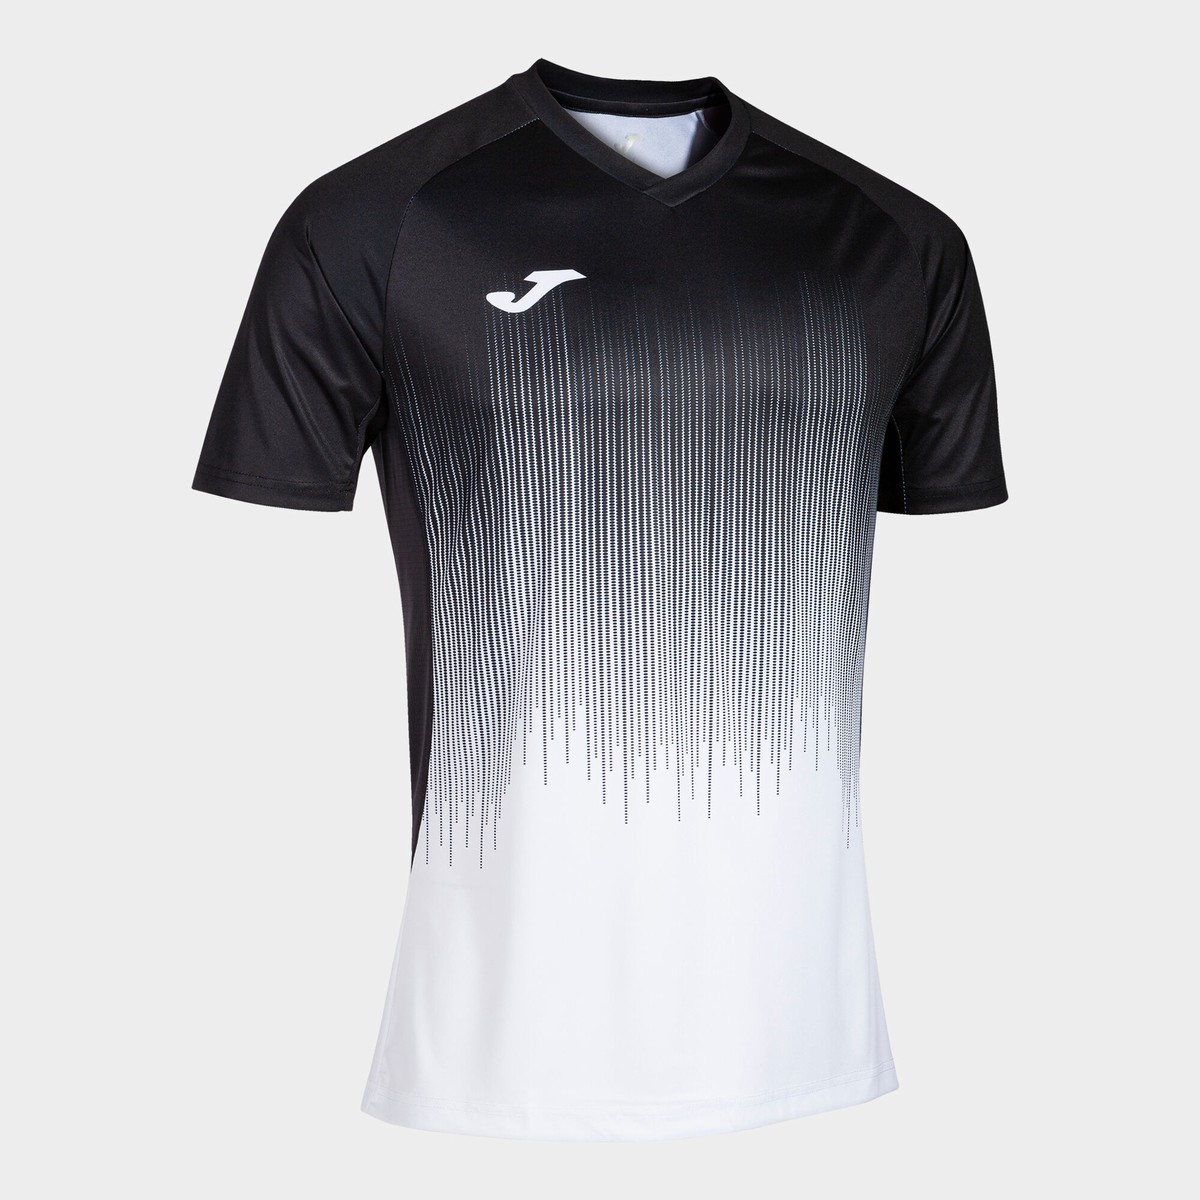 Joma TIGER IV Online - Camiseta Hombre Negras